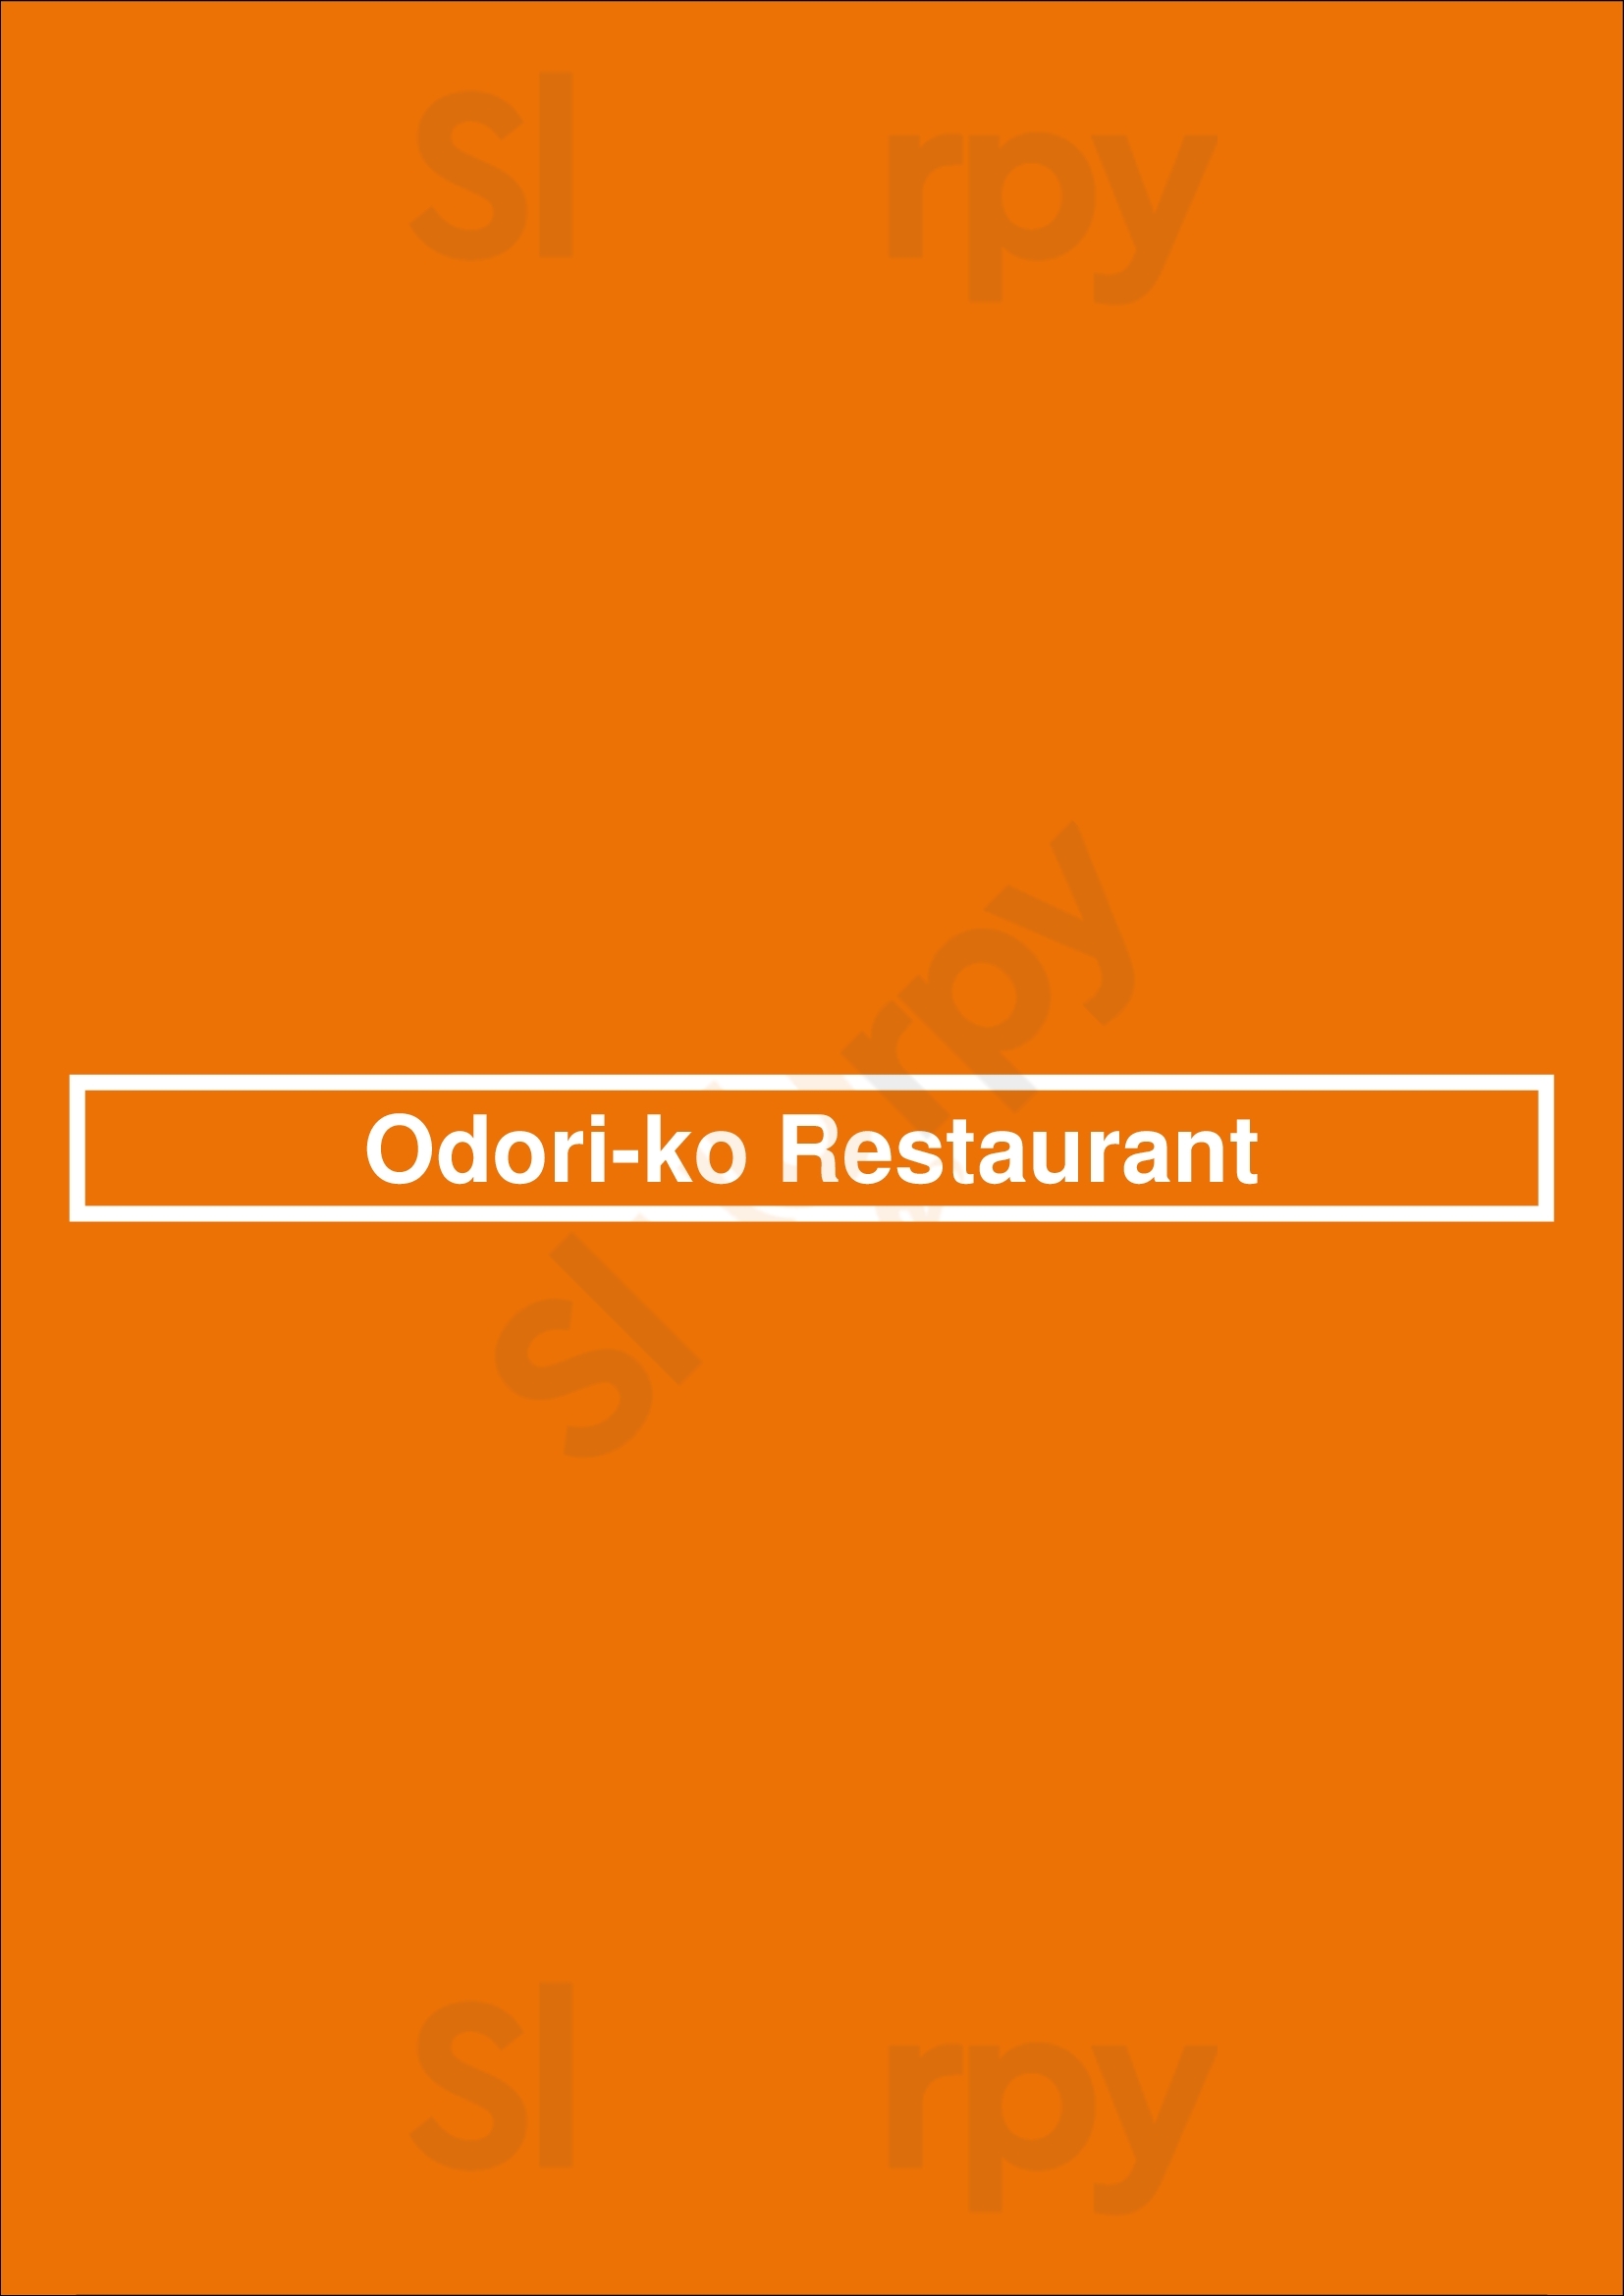 Odori-ko Restaurant Honolulu Menu - 1